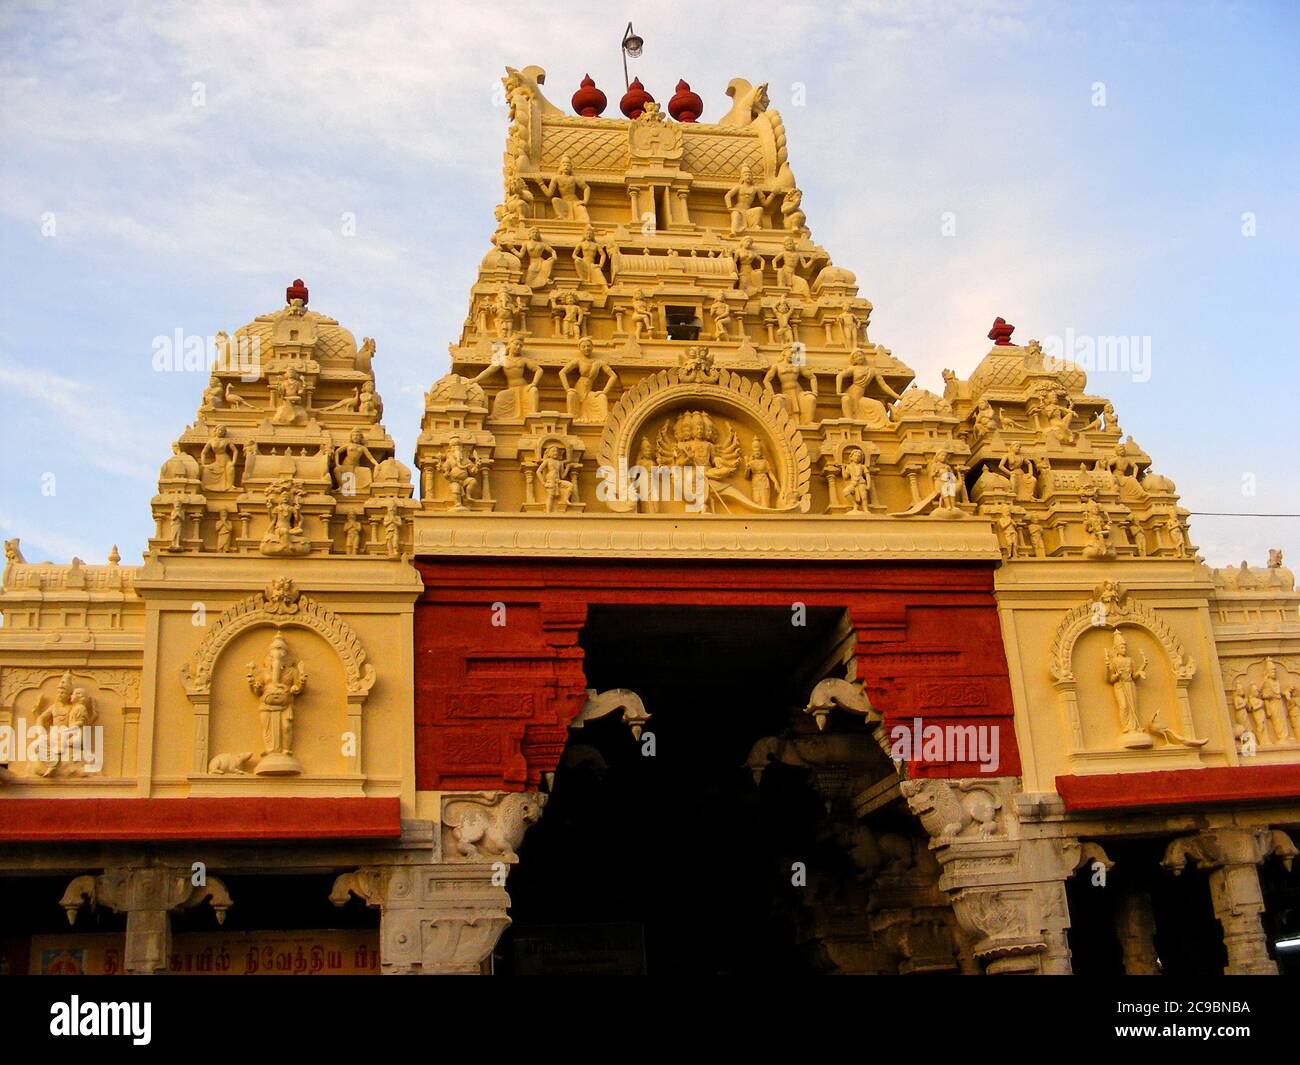 Tiruchendur Murugan temple, Tamil Nadu, is famed for its Dravidian ...